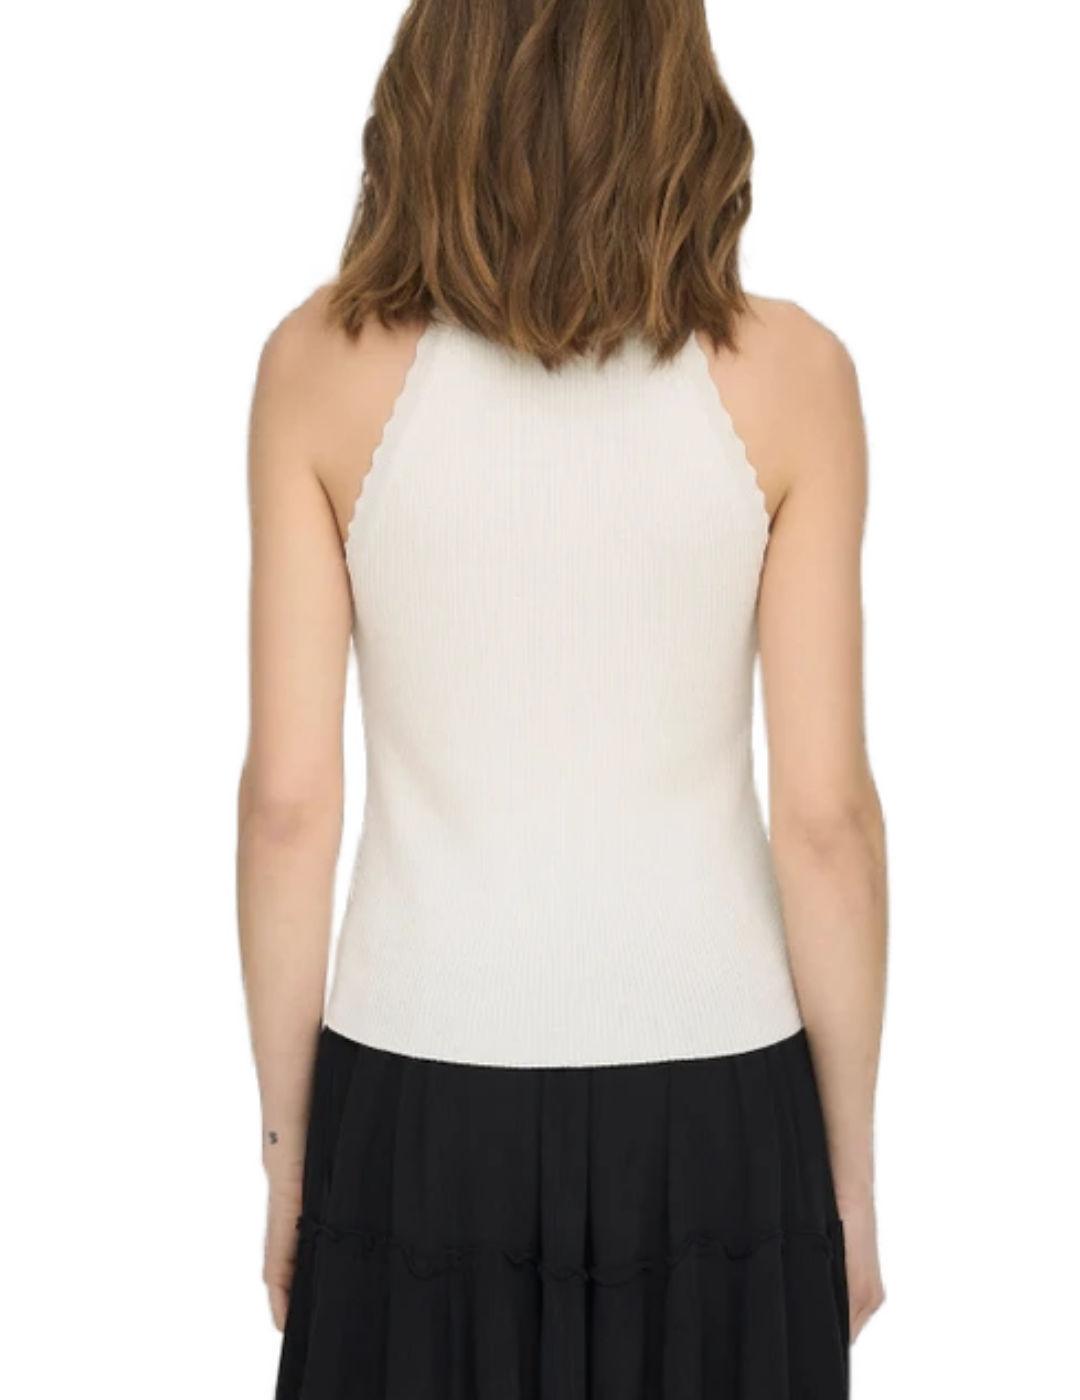 Camiseta Only Gemma blanco roto tirantes para mujer